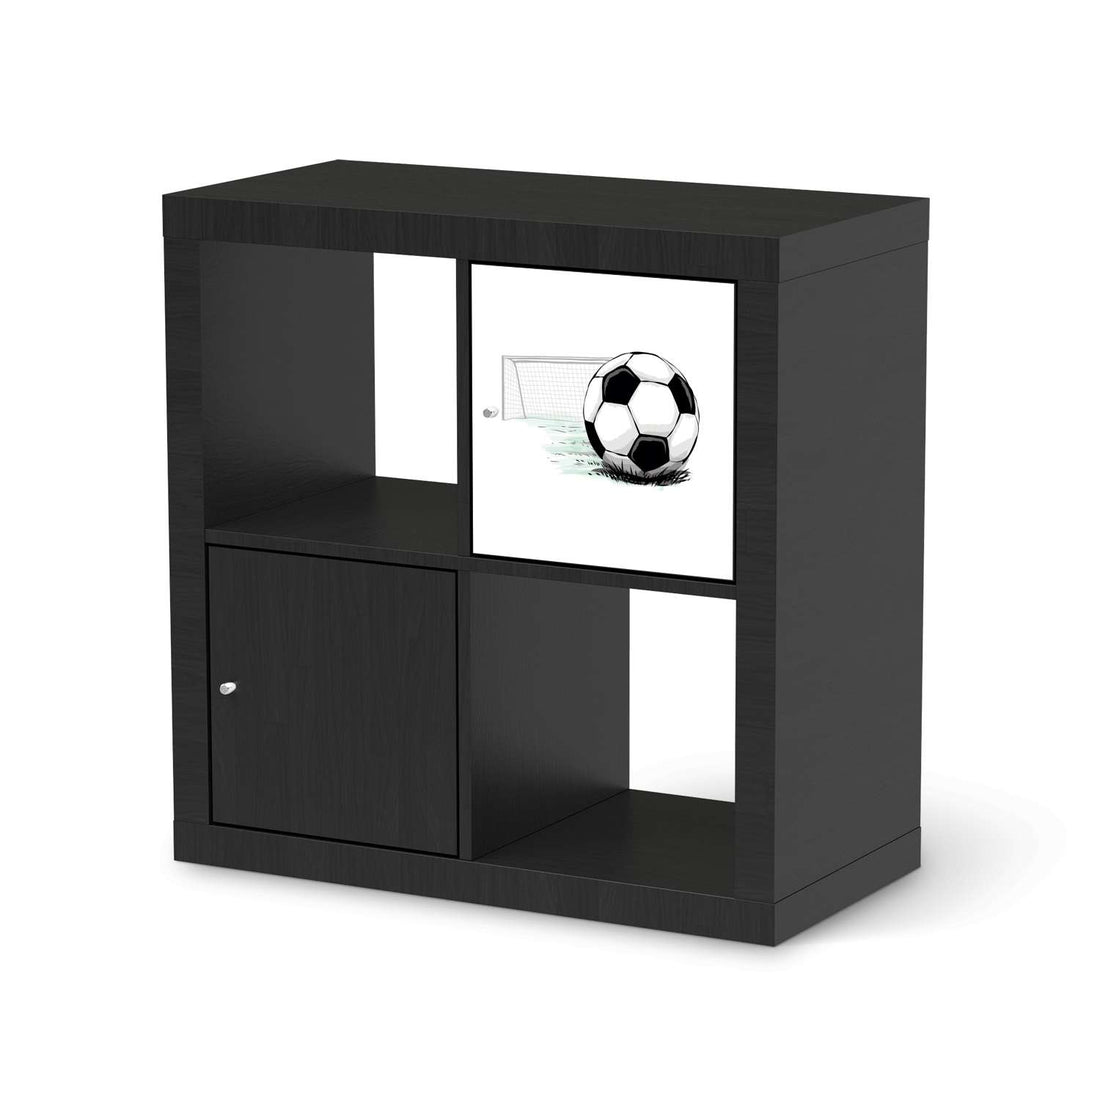 Selbstklebende Folie Freistoss - IKEA Kallax Regal 1 Türe - schwarz